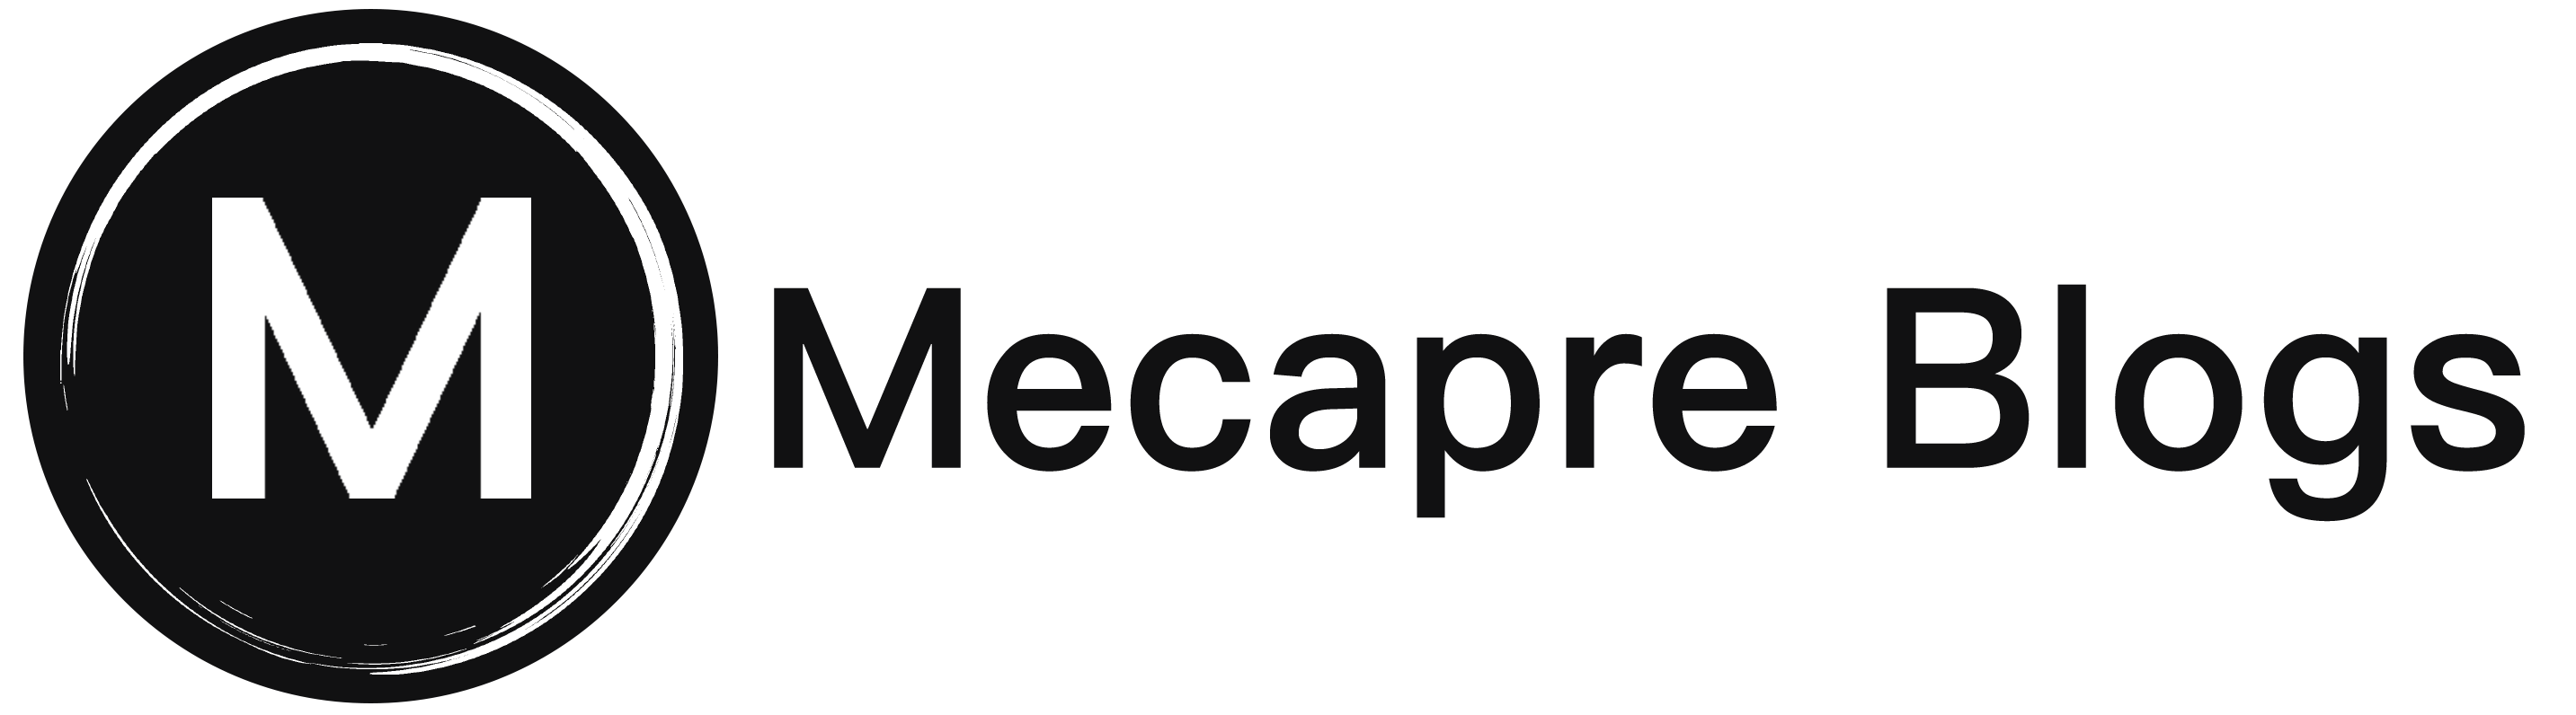 Mecapre Blogs - Unleash Knowledge